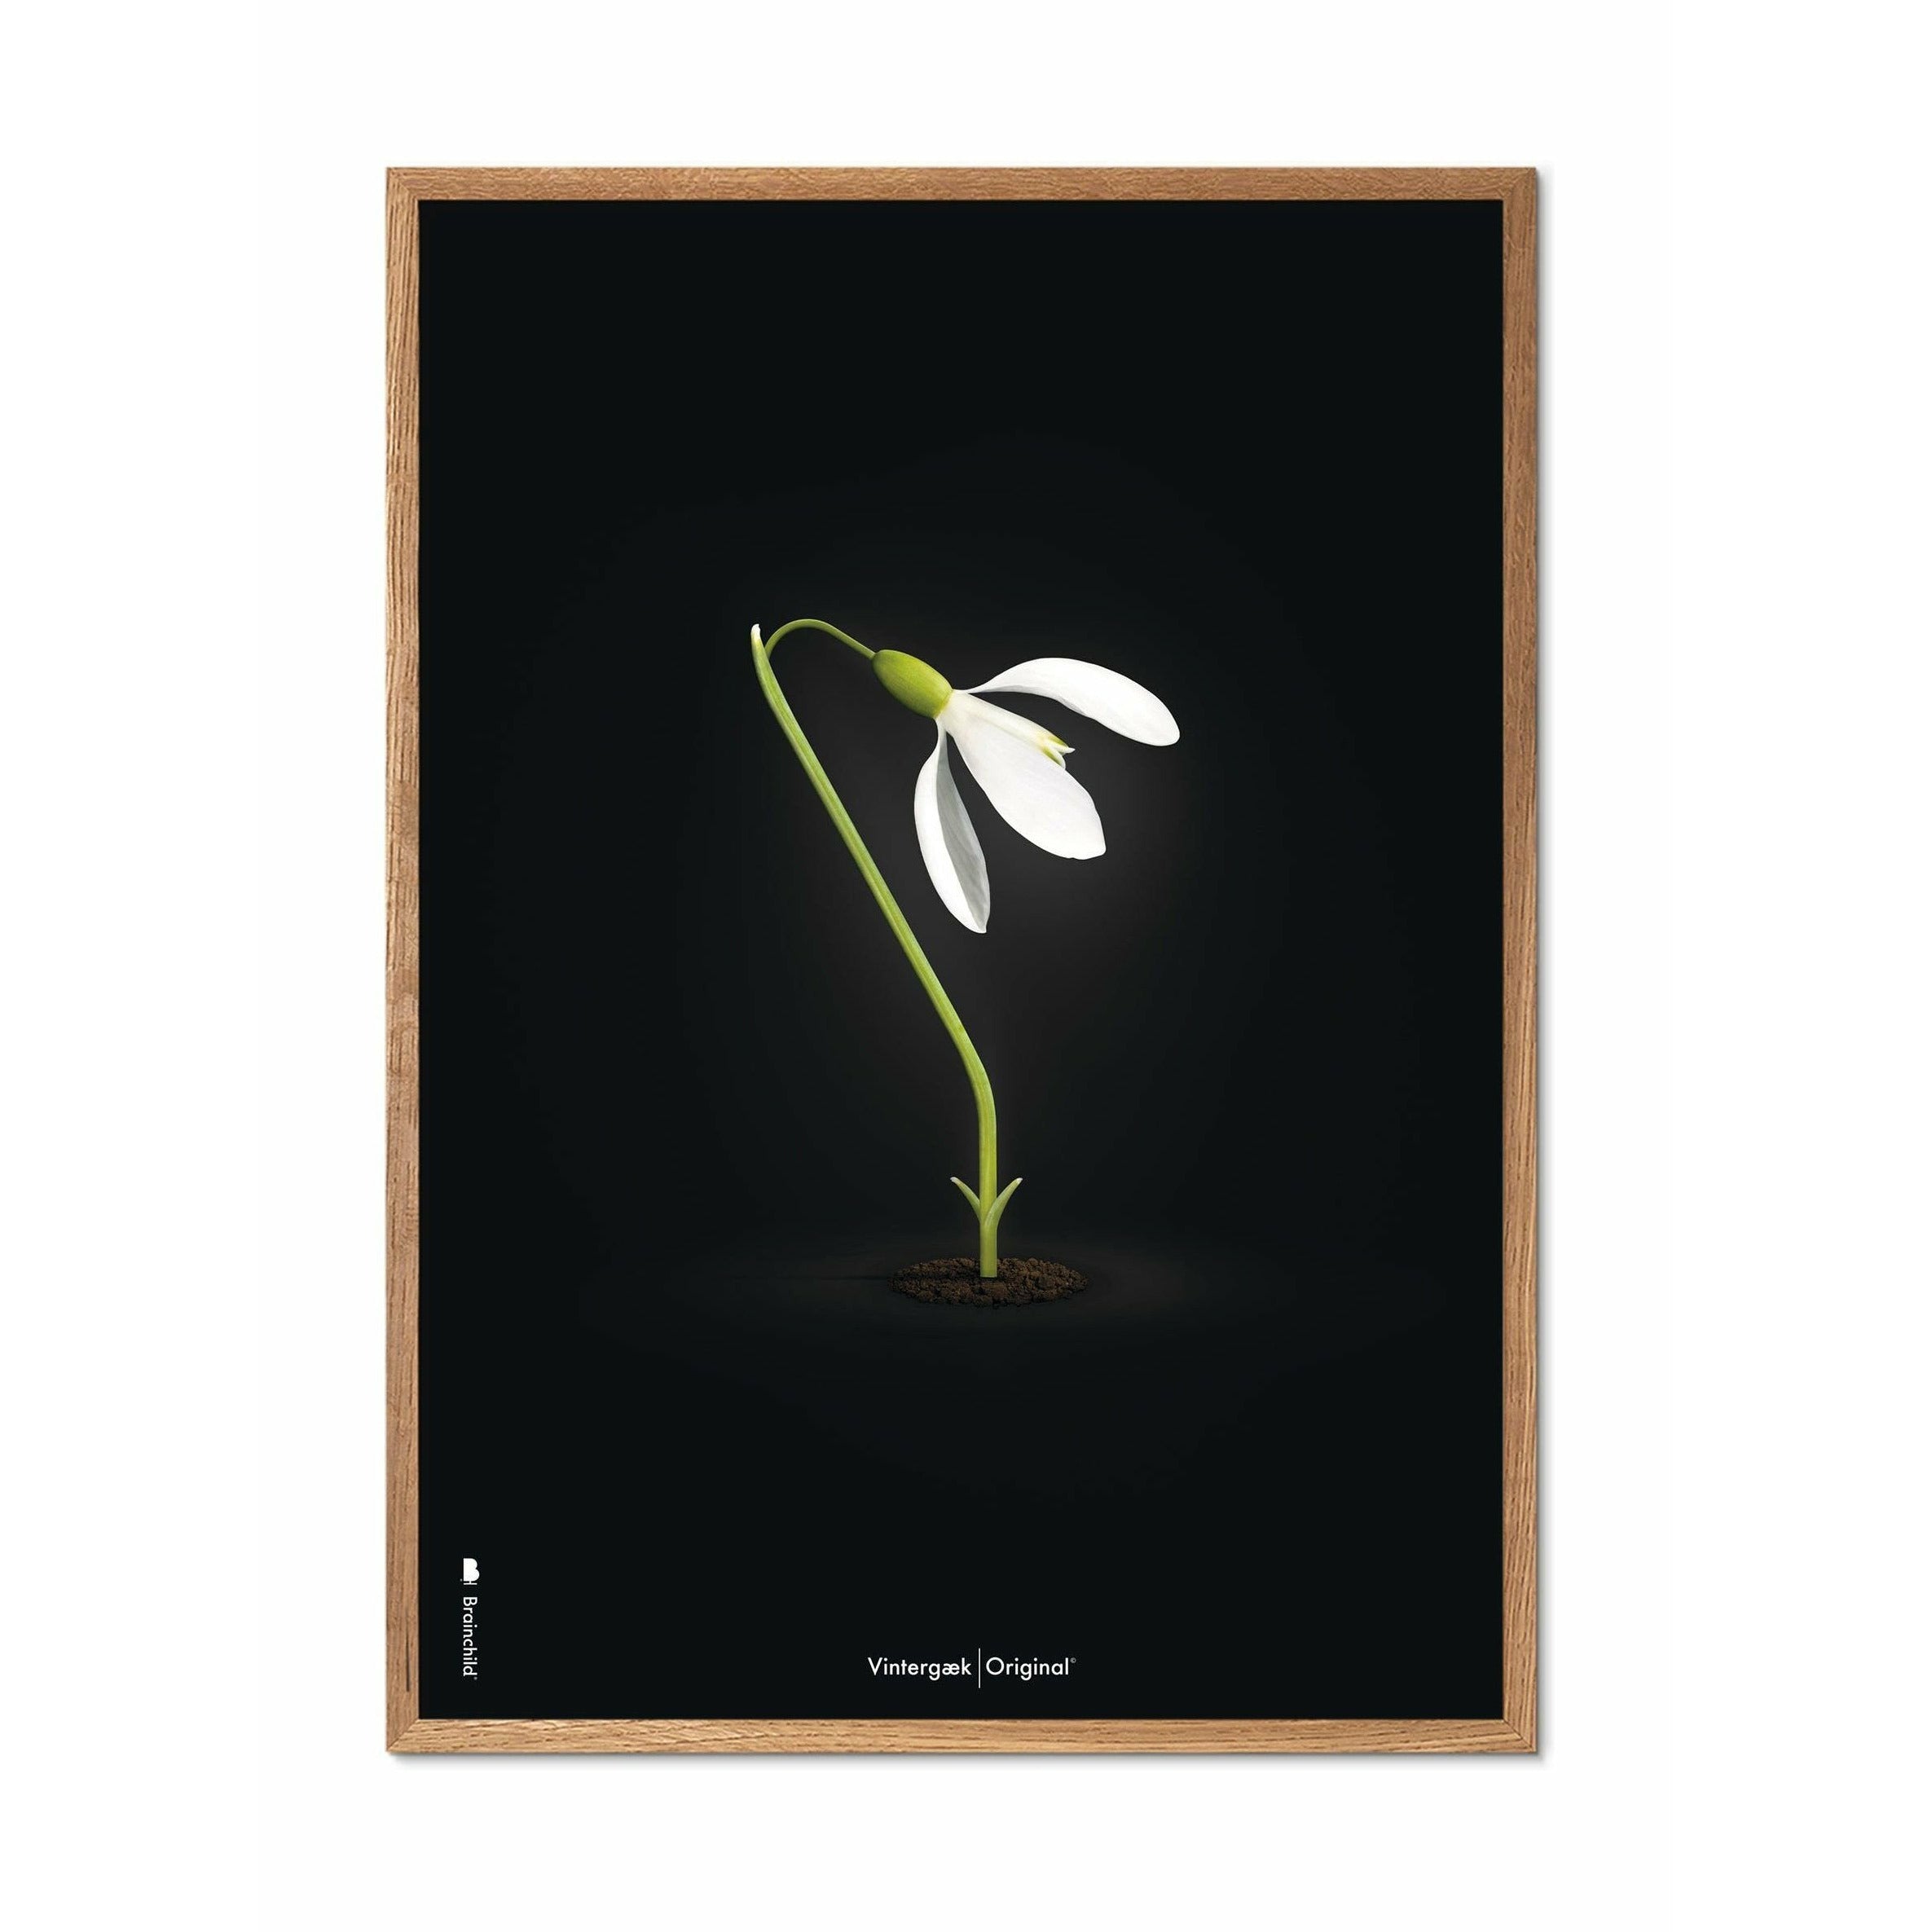 Brainchild Snowdrop Classic Poster, Frame Made Of Light Wood 70x100 Cm, Black Background